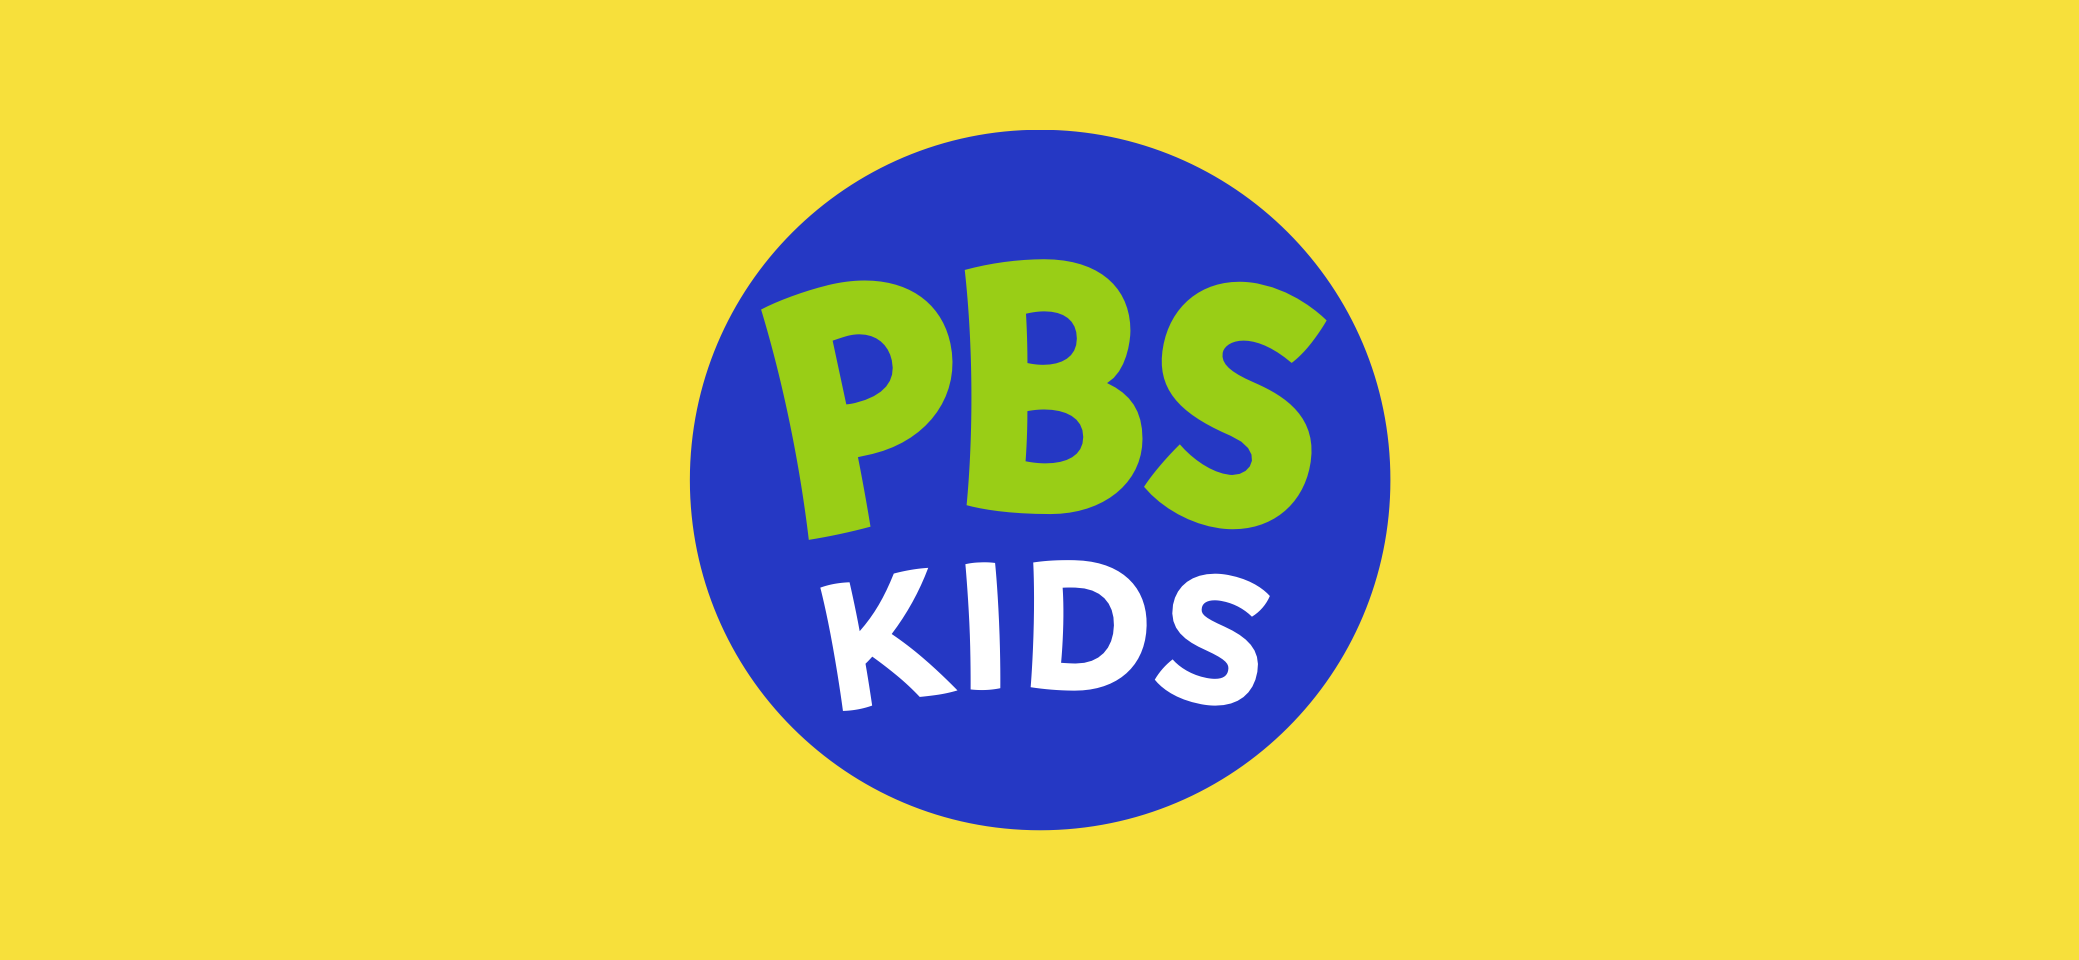 pbs kids banner